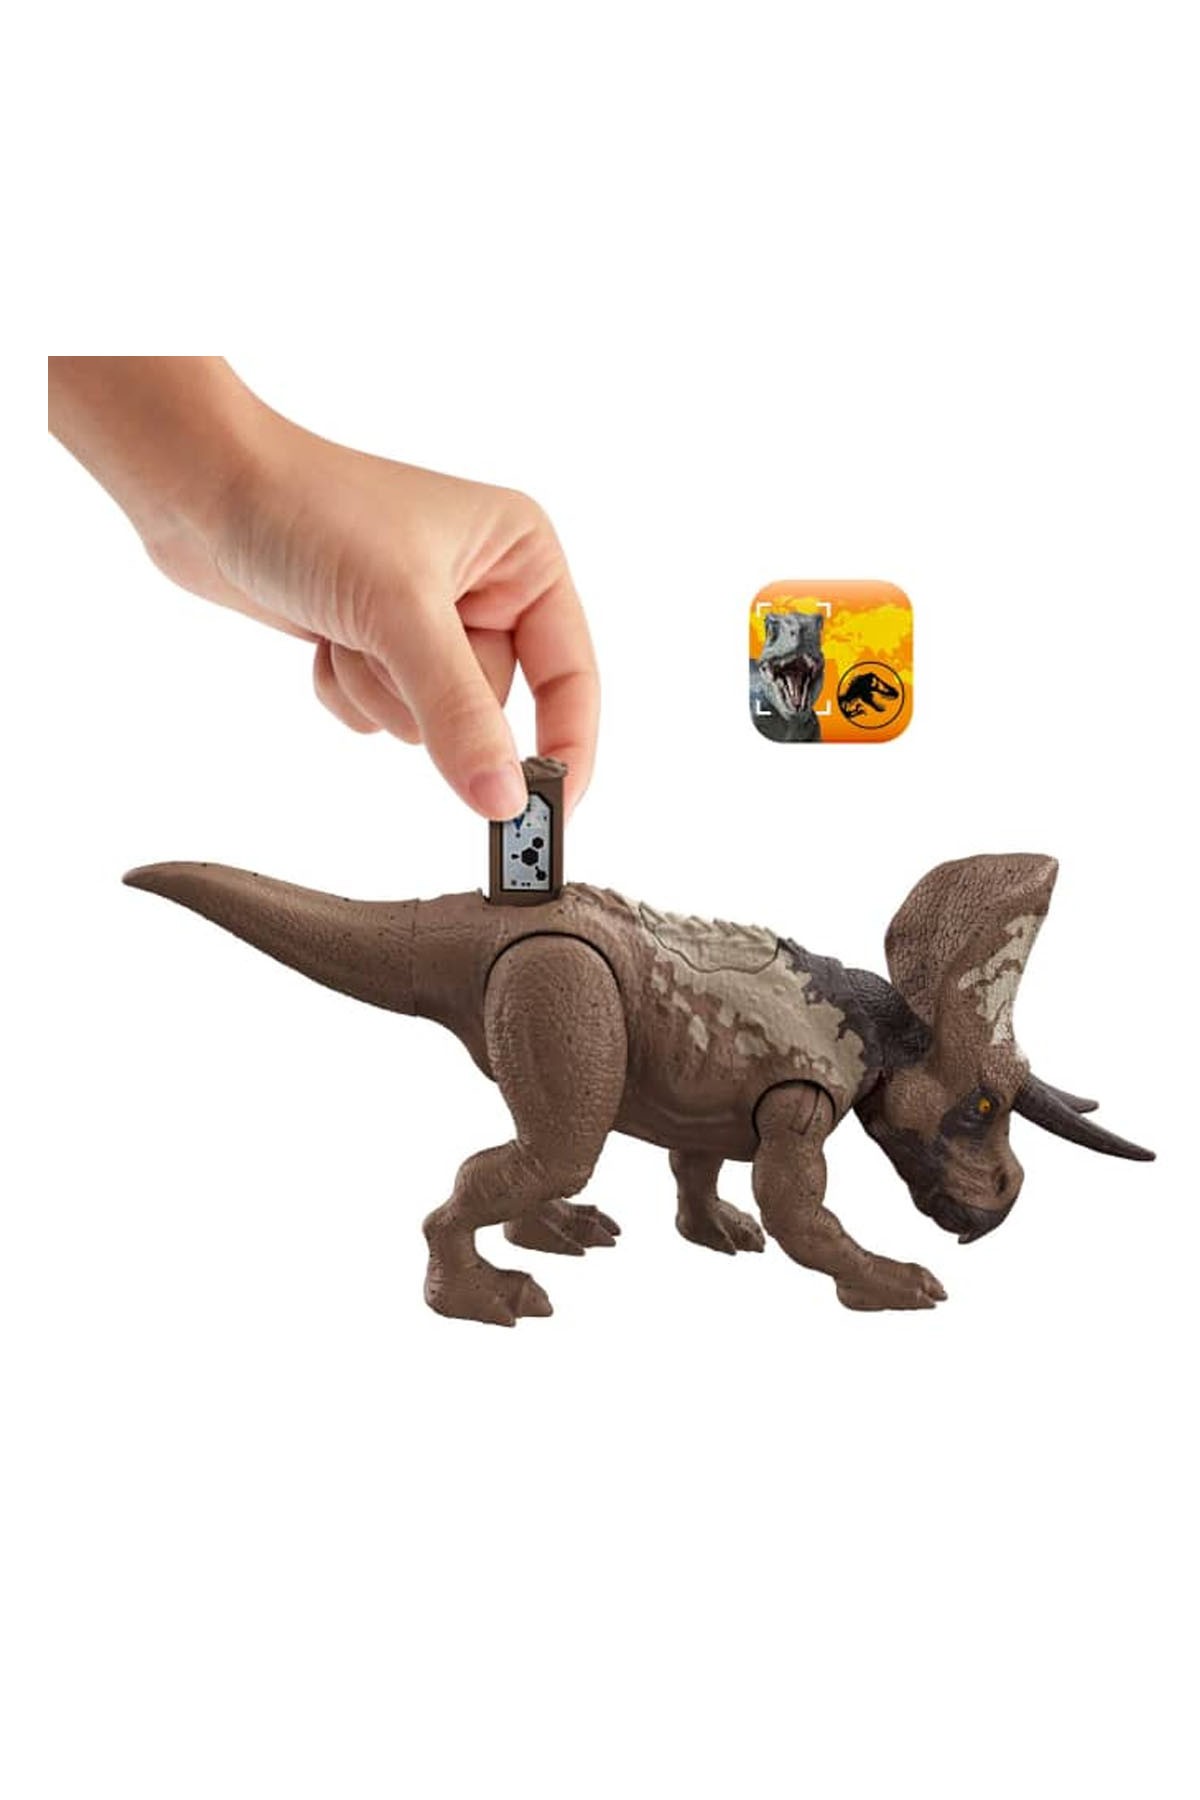 Jurassic World Hareketli Dinozor Figürleri HLN66